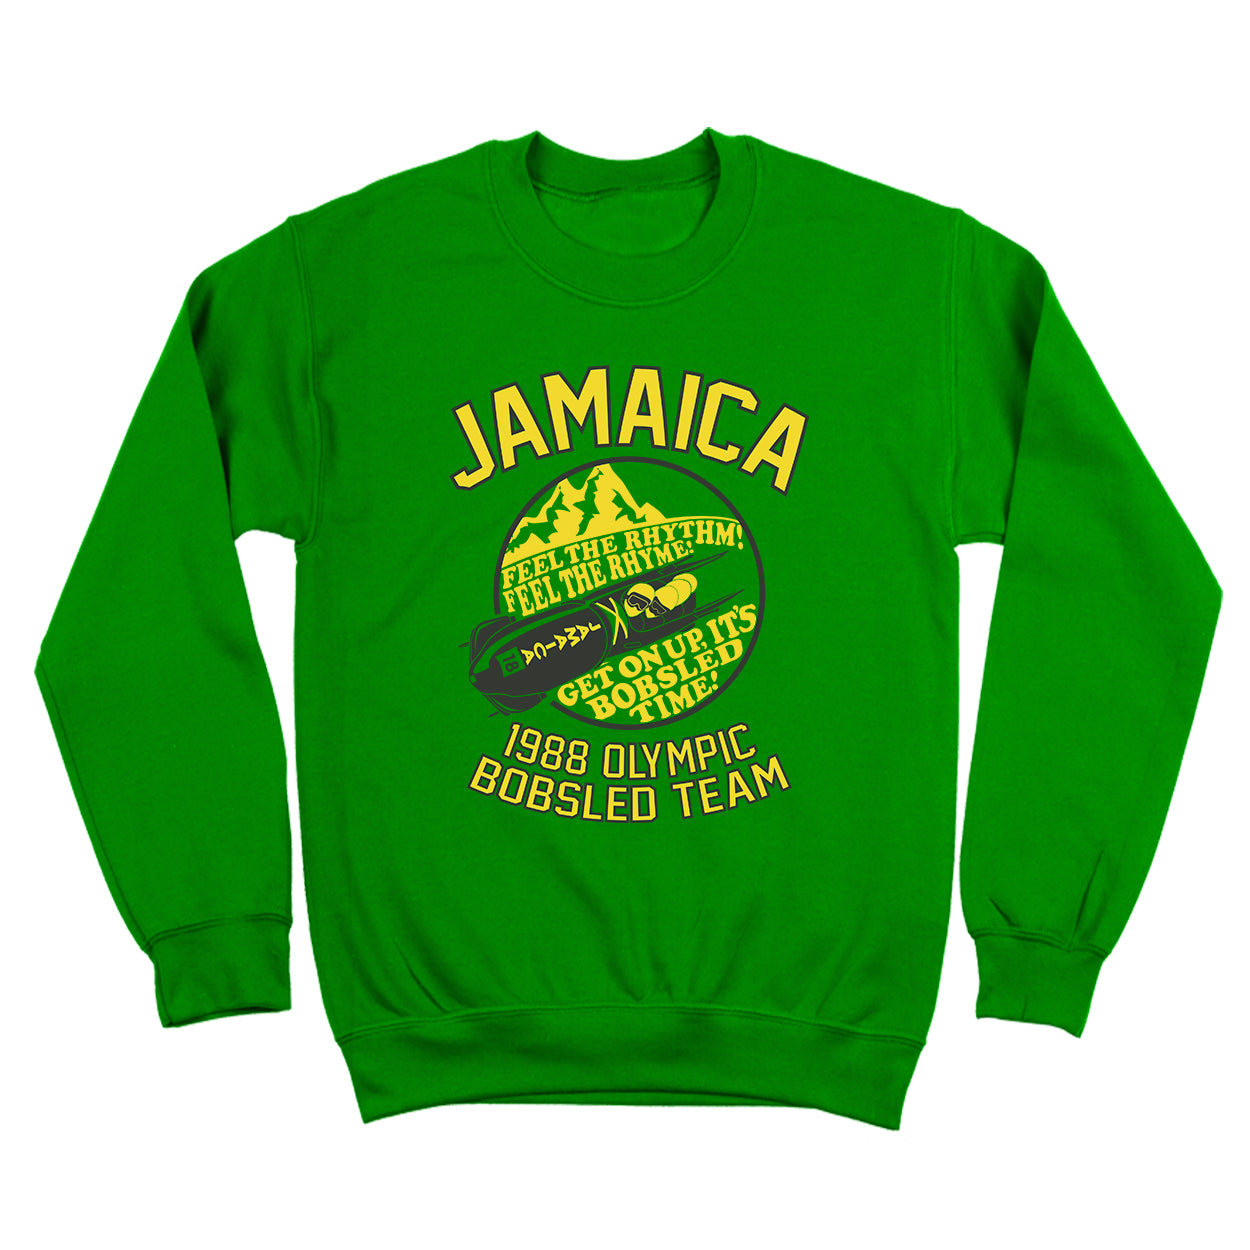 Jamaica 1988 Olympic Bobsled Team Tshirt - Donkey Tees